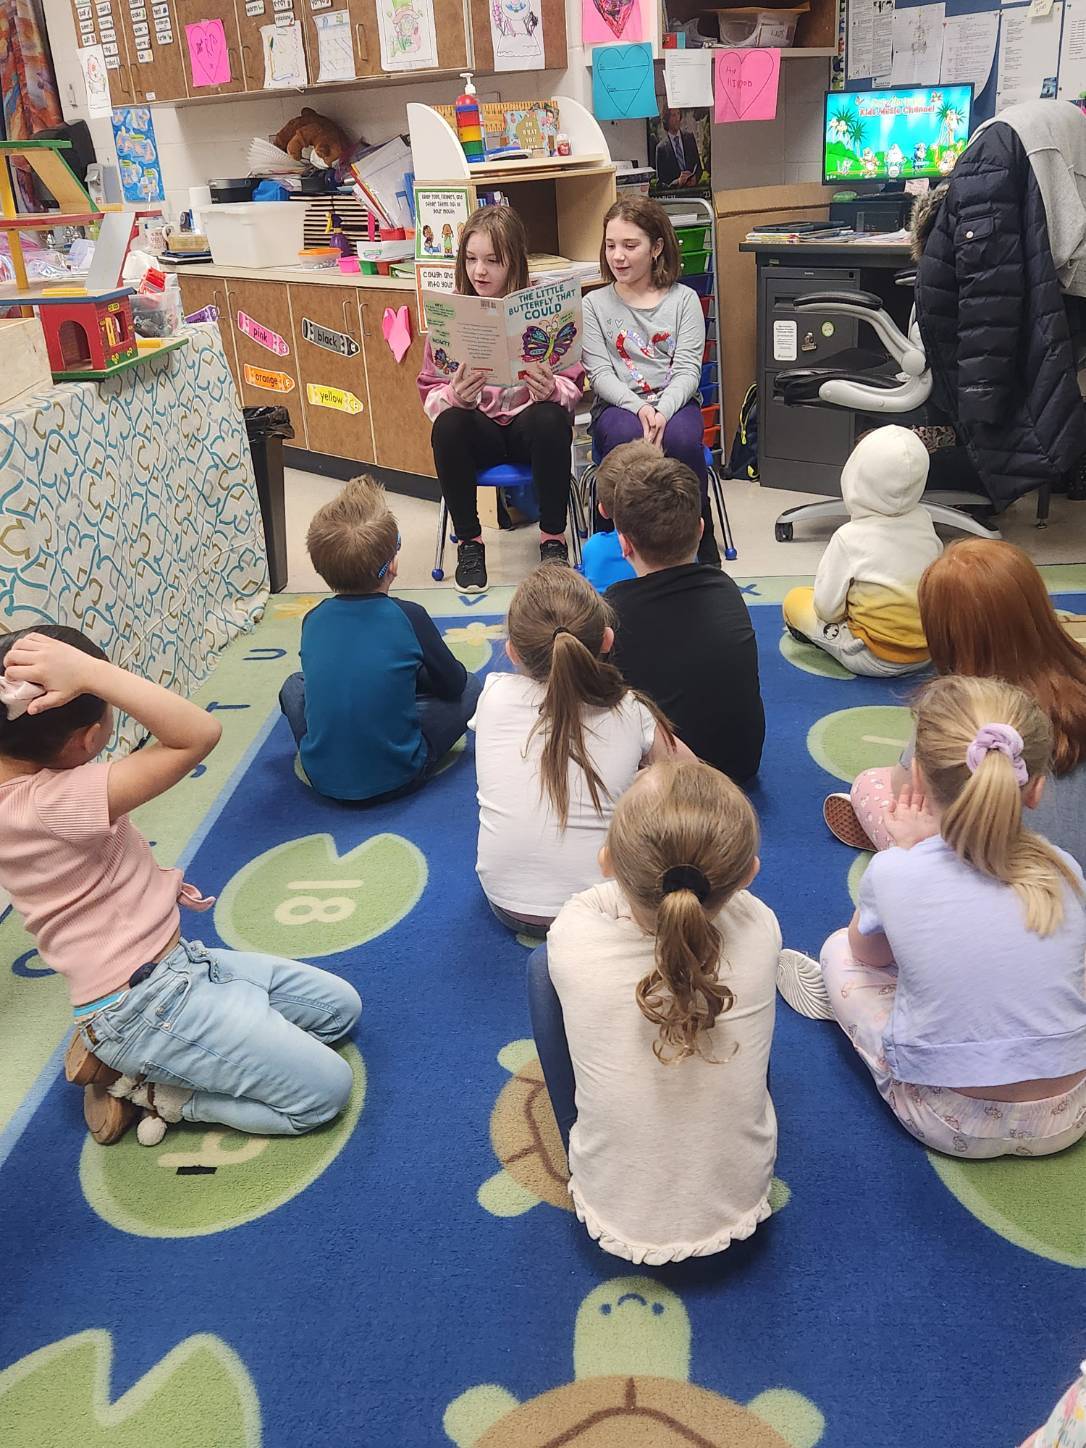 3rd grade students read to preschool